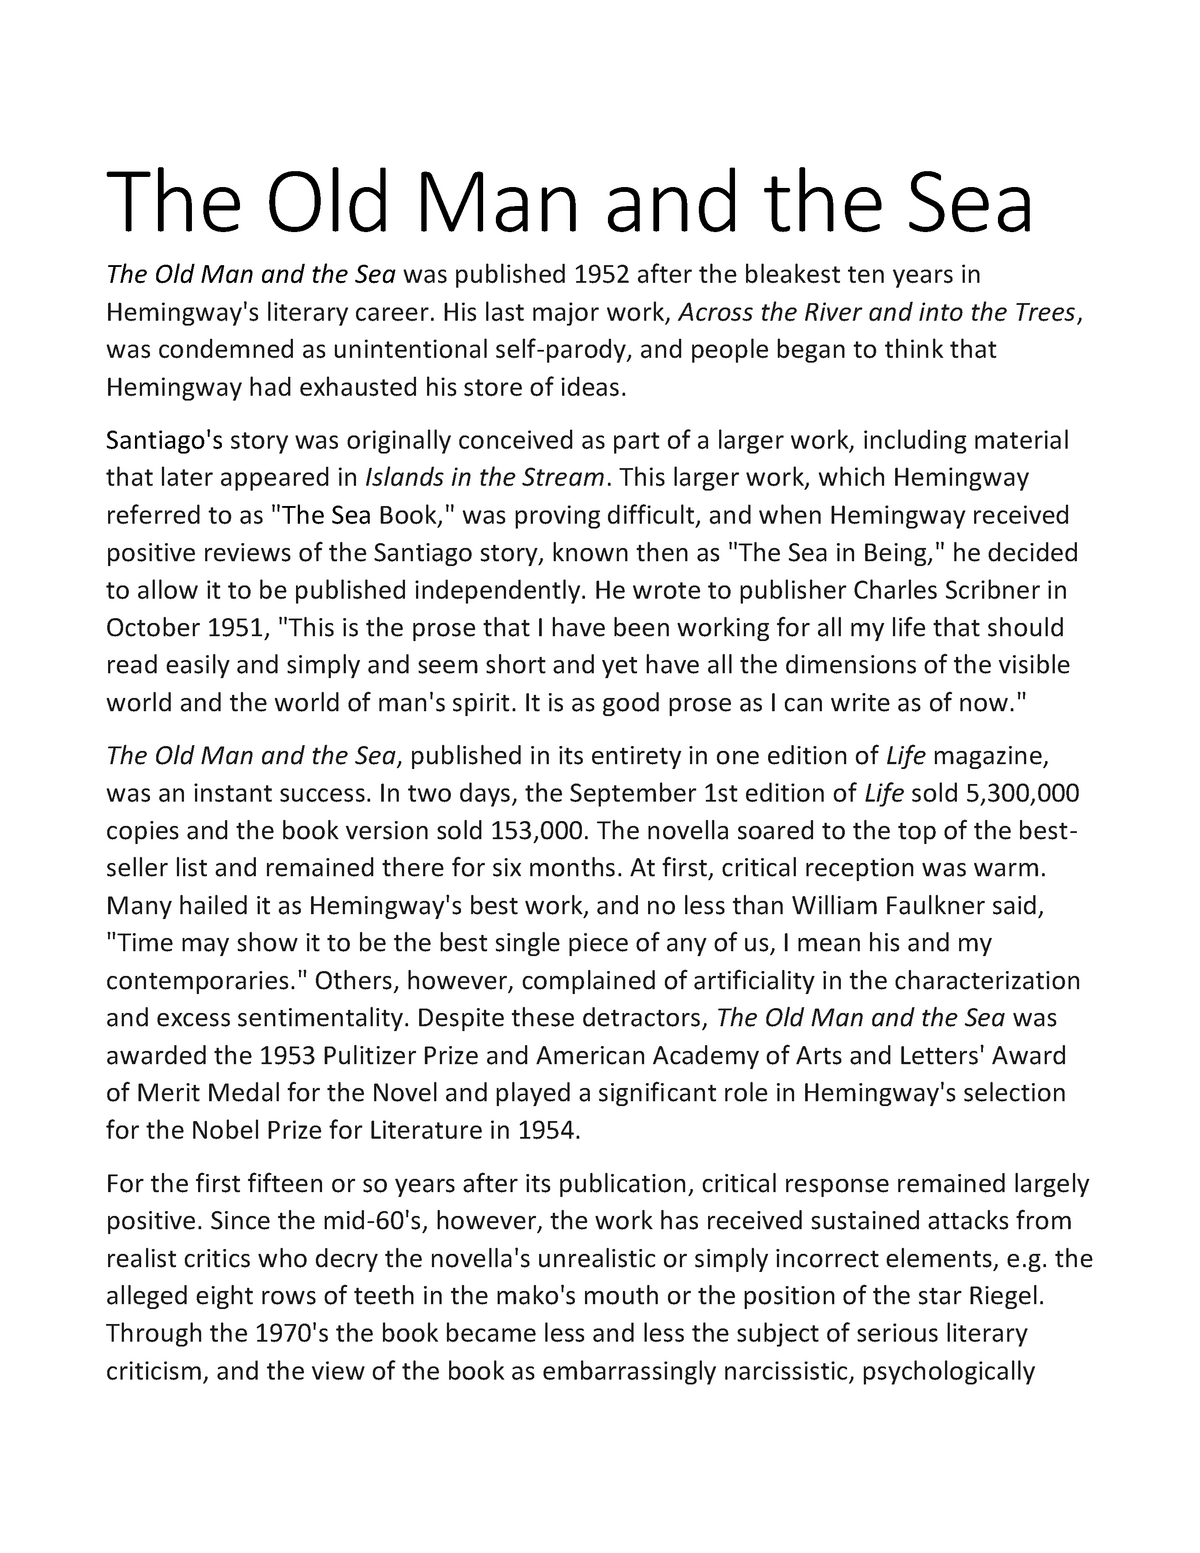 description of old man essay